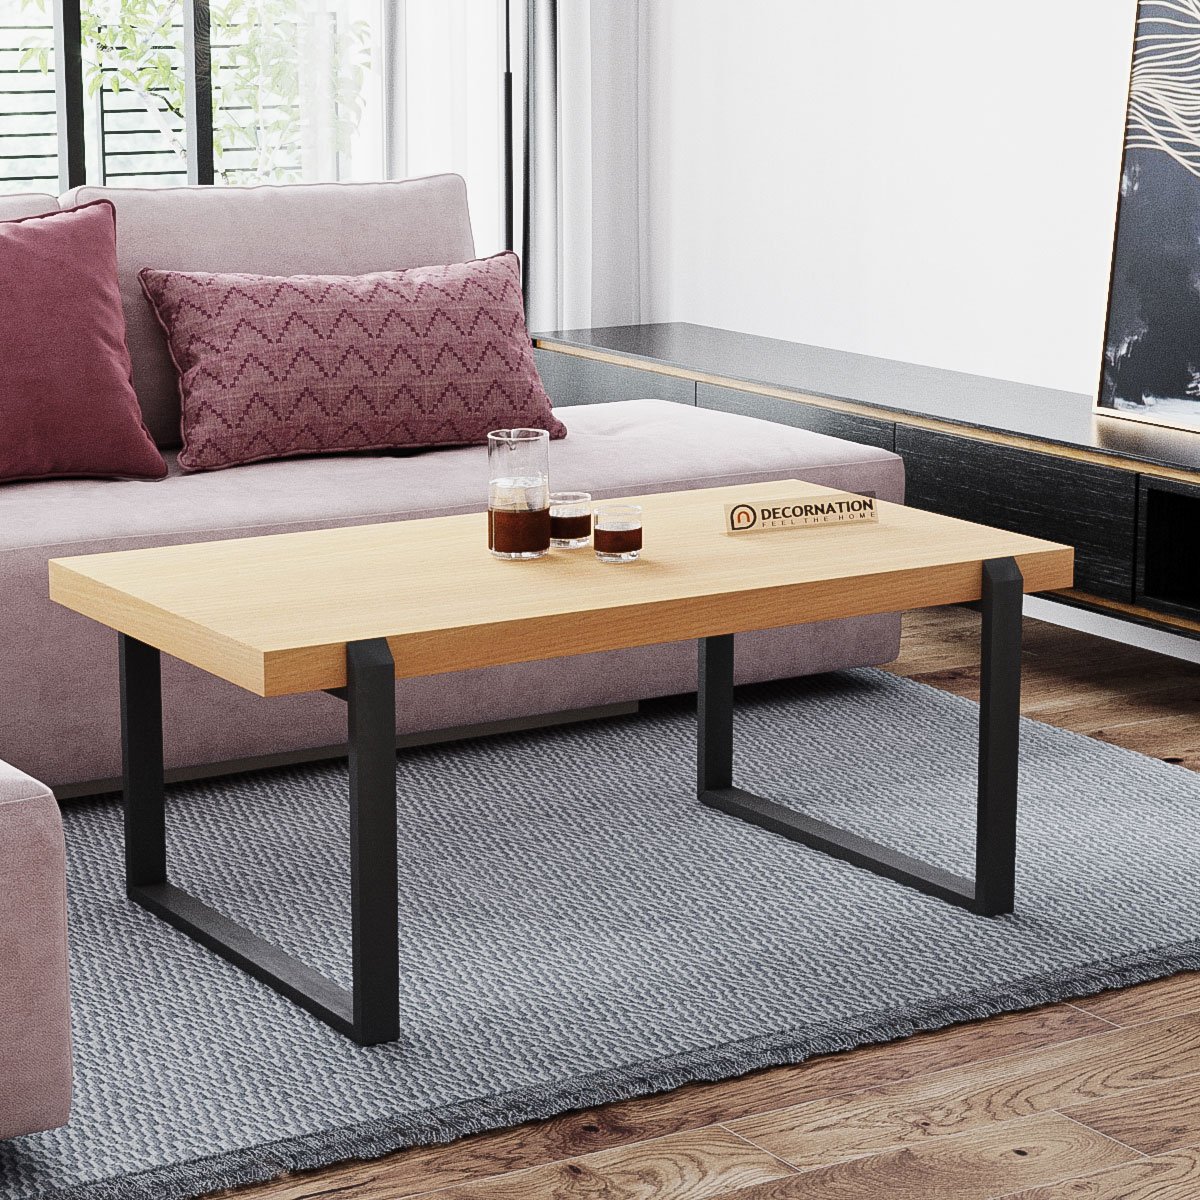 Kiara Coffee Table for Living Room/Bedroom – Bavarian Beech